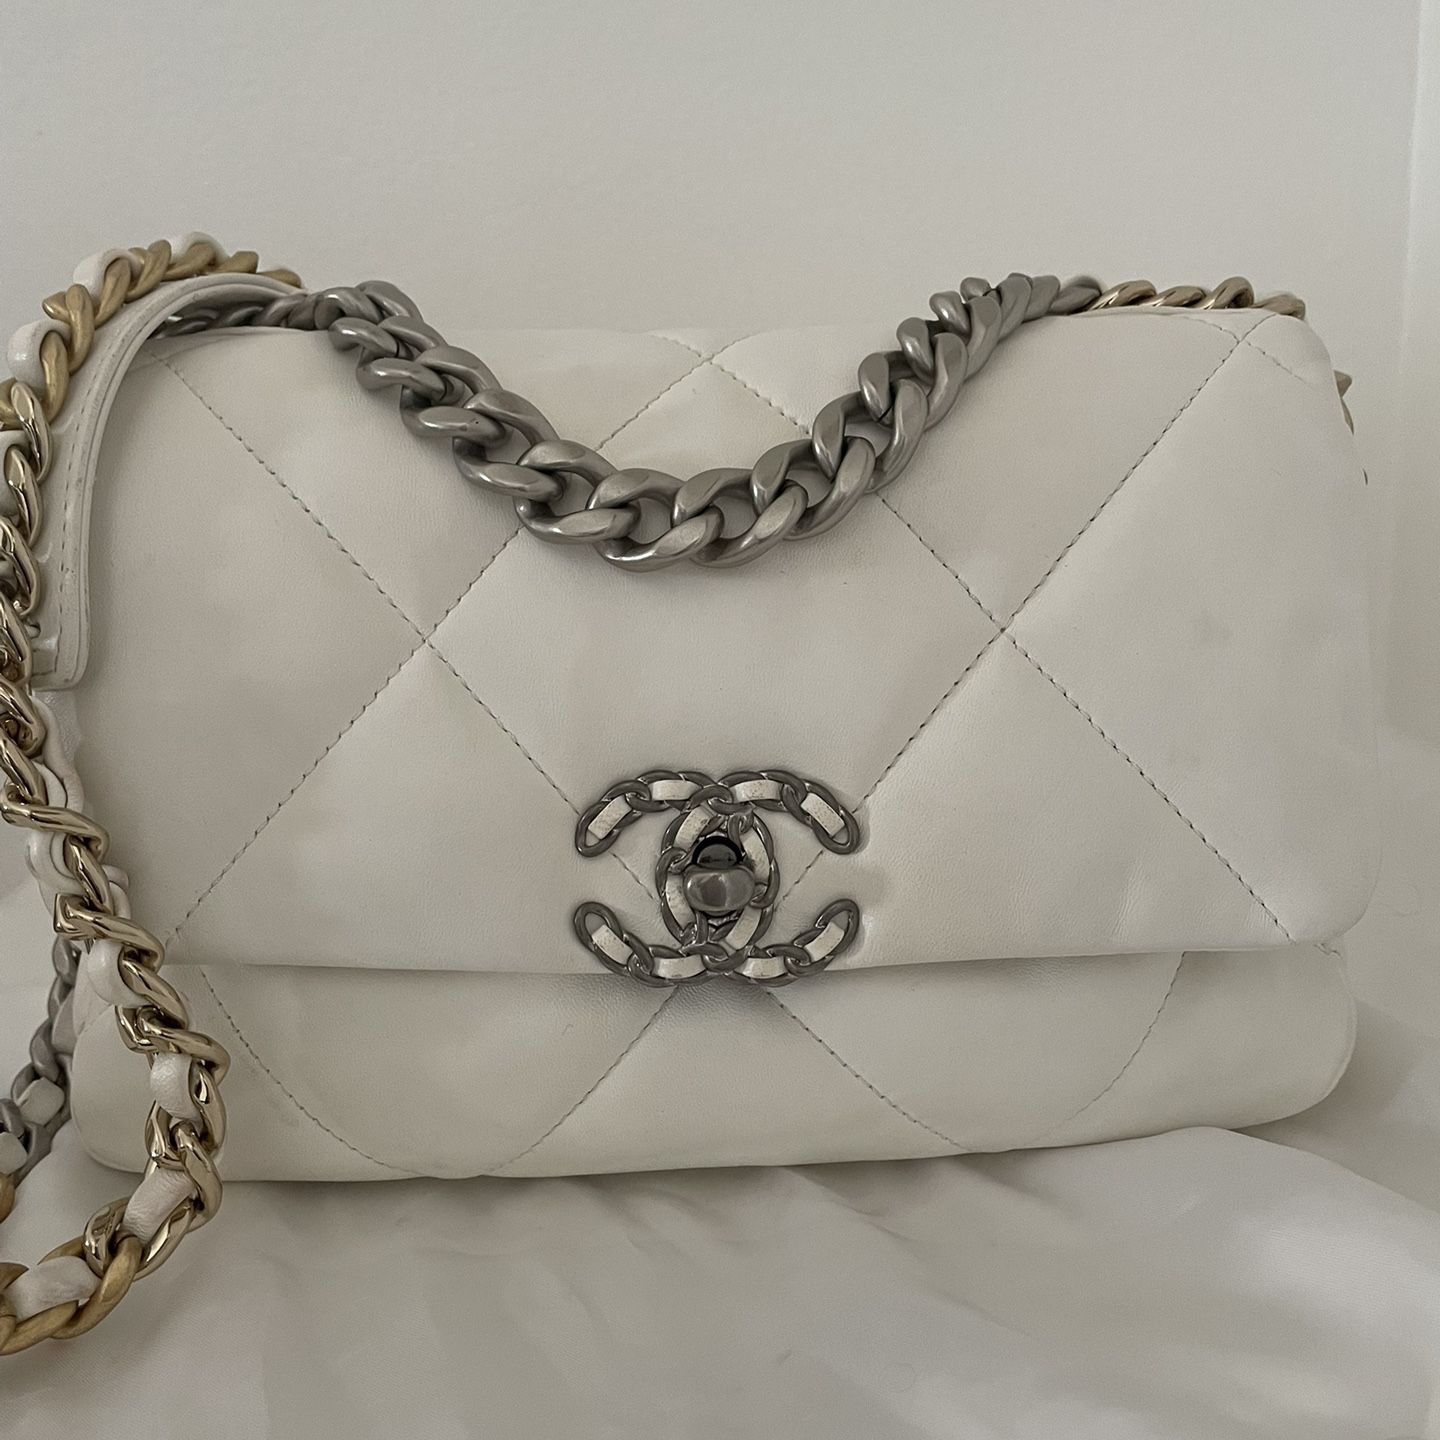 Chanel 19 Bag for Sale in Encinitas, CA - OfferUp